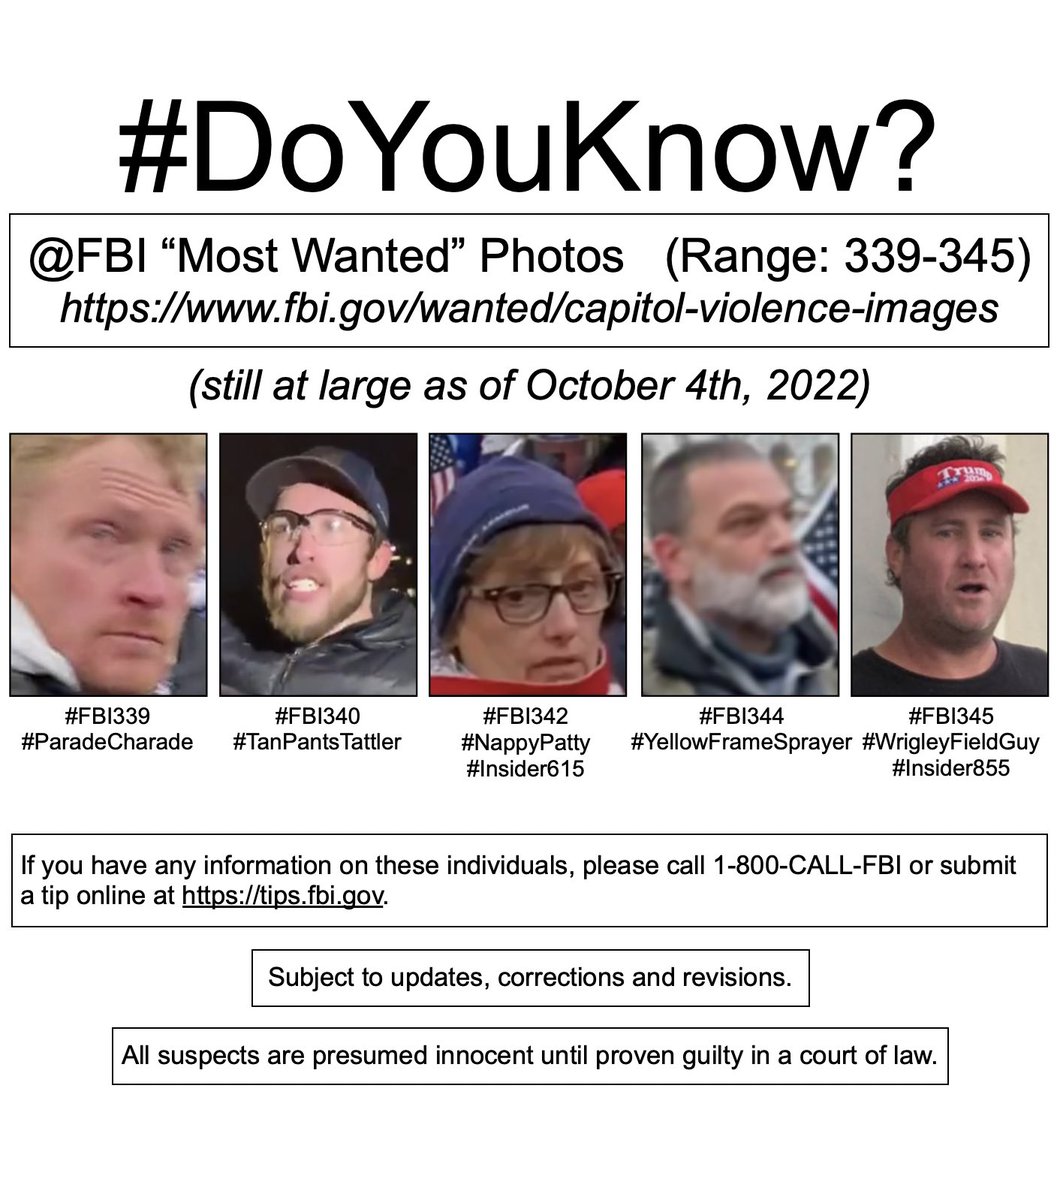 #SeditionHunters
#DoYouKnow?
🧵
33/

#FBI wanted list.
Link: fbi.gov/wanted/capitol…
Range: 339-345

#FBI339 (#ParadeCharade)

#FBI340 (#TanPantsTattler)

#FBI342 (#NappyPatty)(#Insider615)

#FBI344 (#YellowFrameSprayer)

#FBI345 (#WrigleyFieldGuy)(#Insider855)

#SeditionInsiders